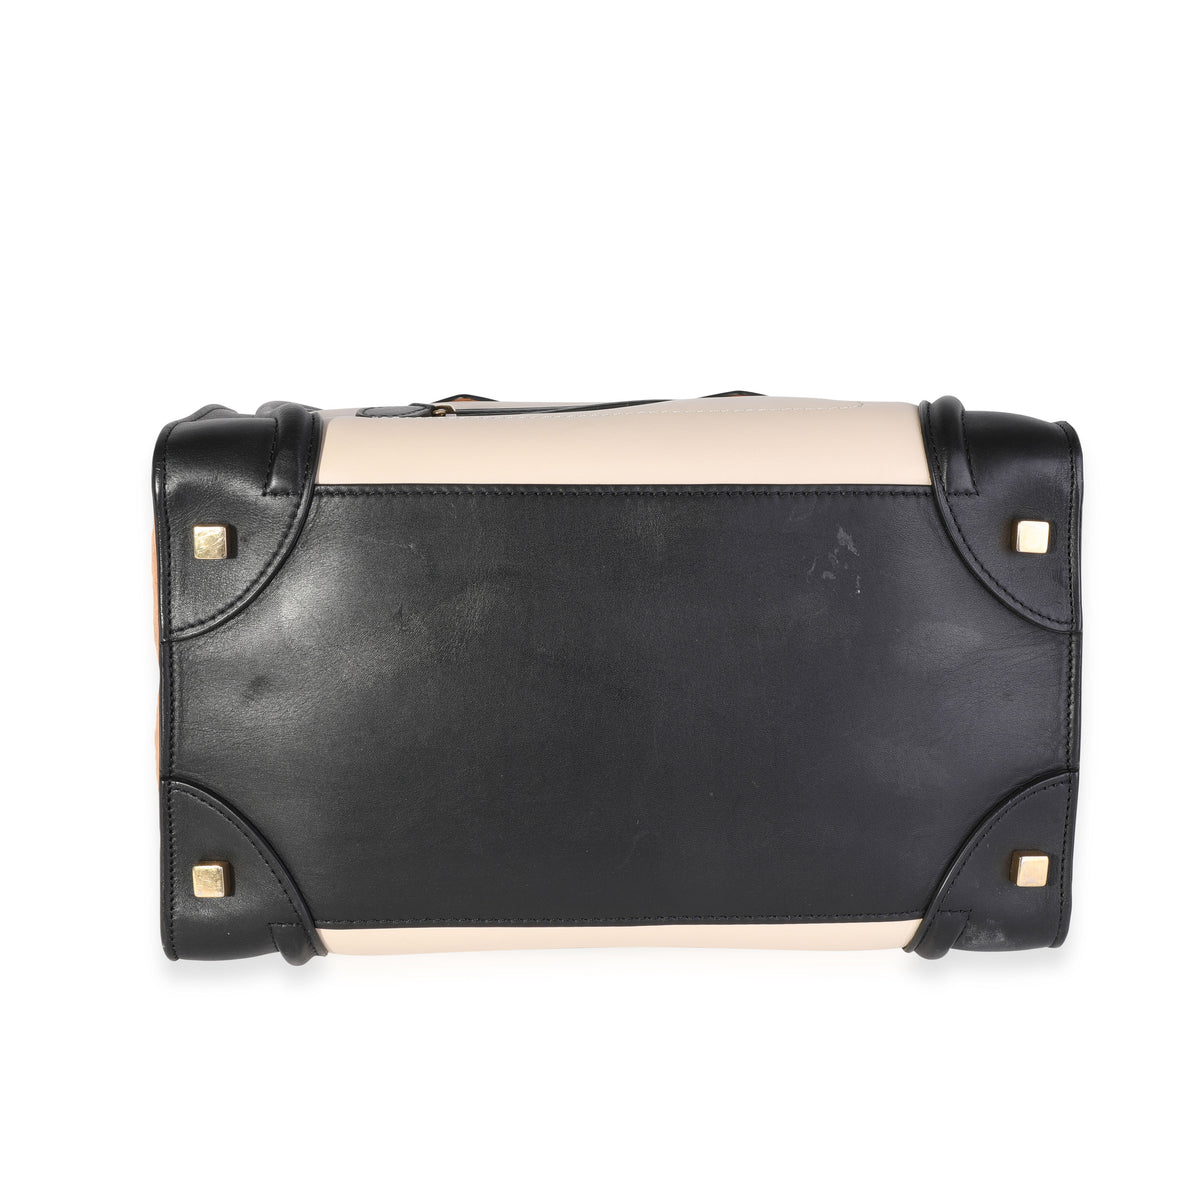 Celine Tricolor Leather & Suede Mini Luggage Tote